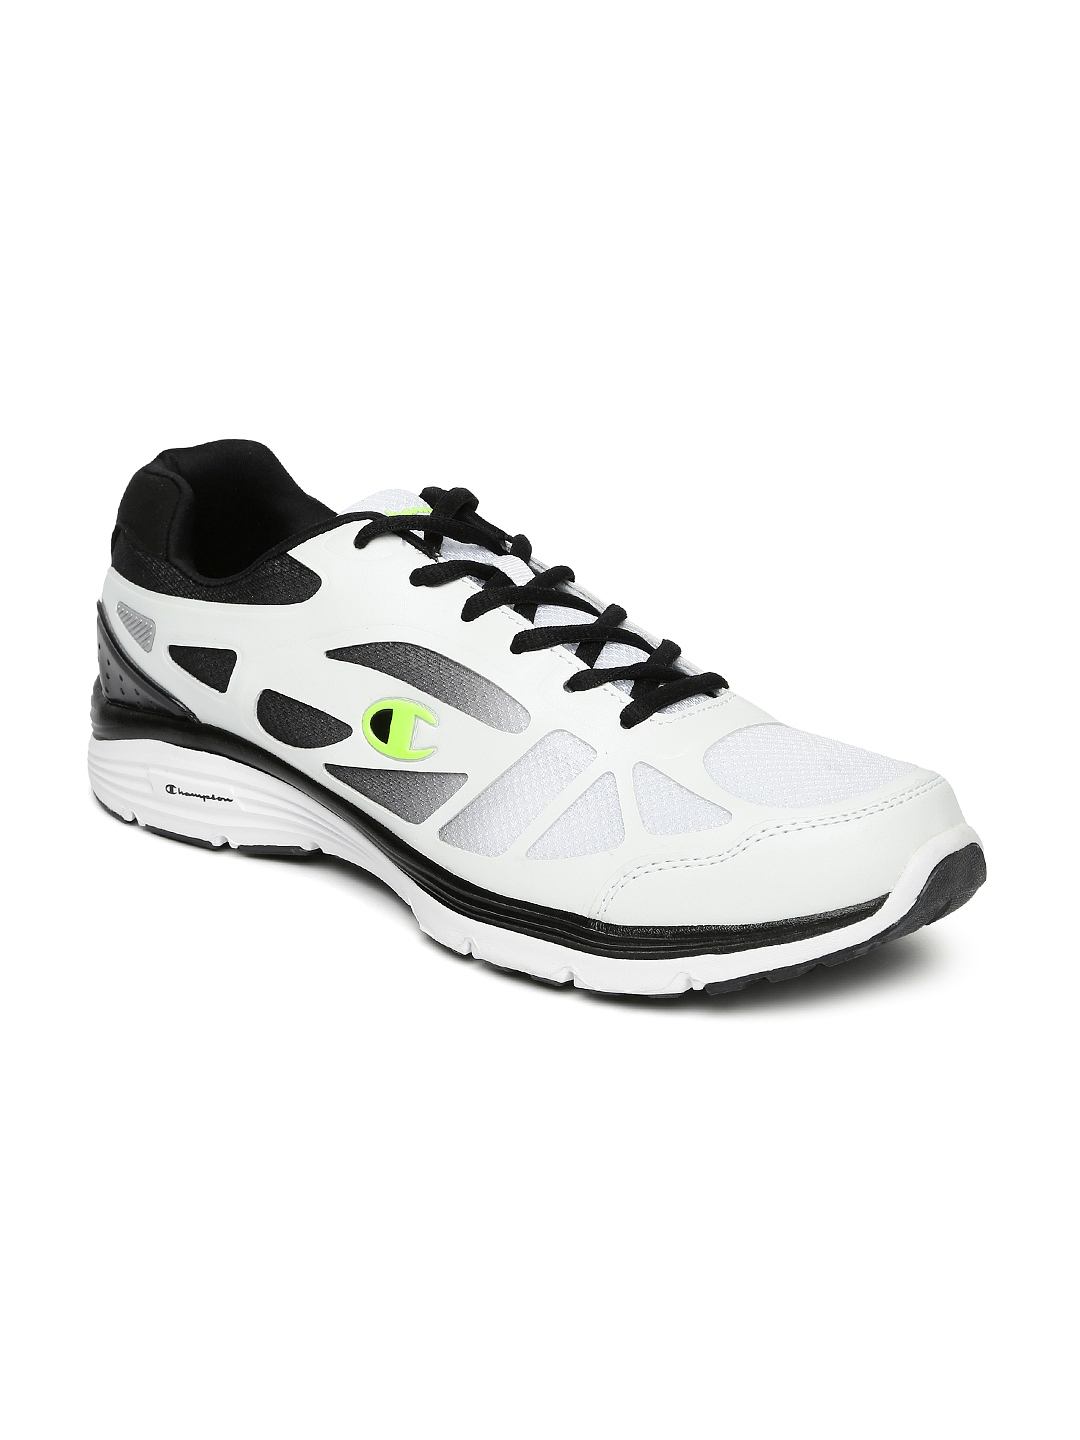 Buy Champion Men White & Black Running Shoes - Sports Shoes for Men ...